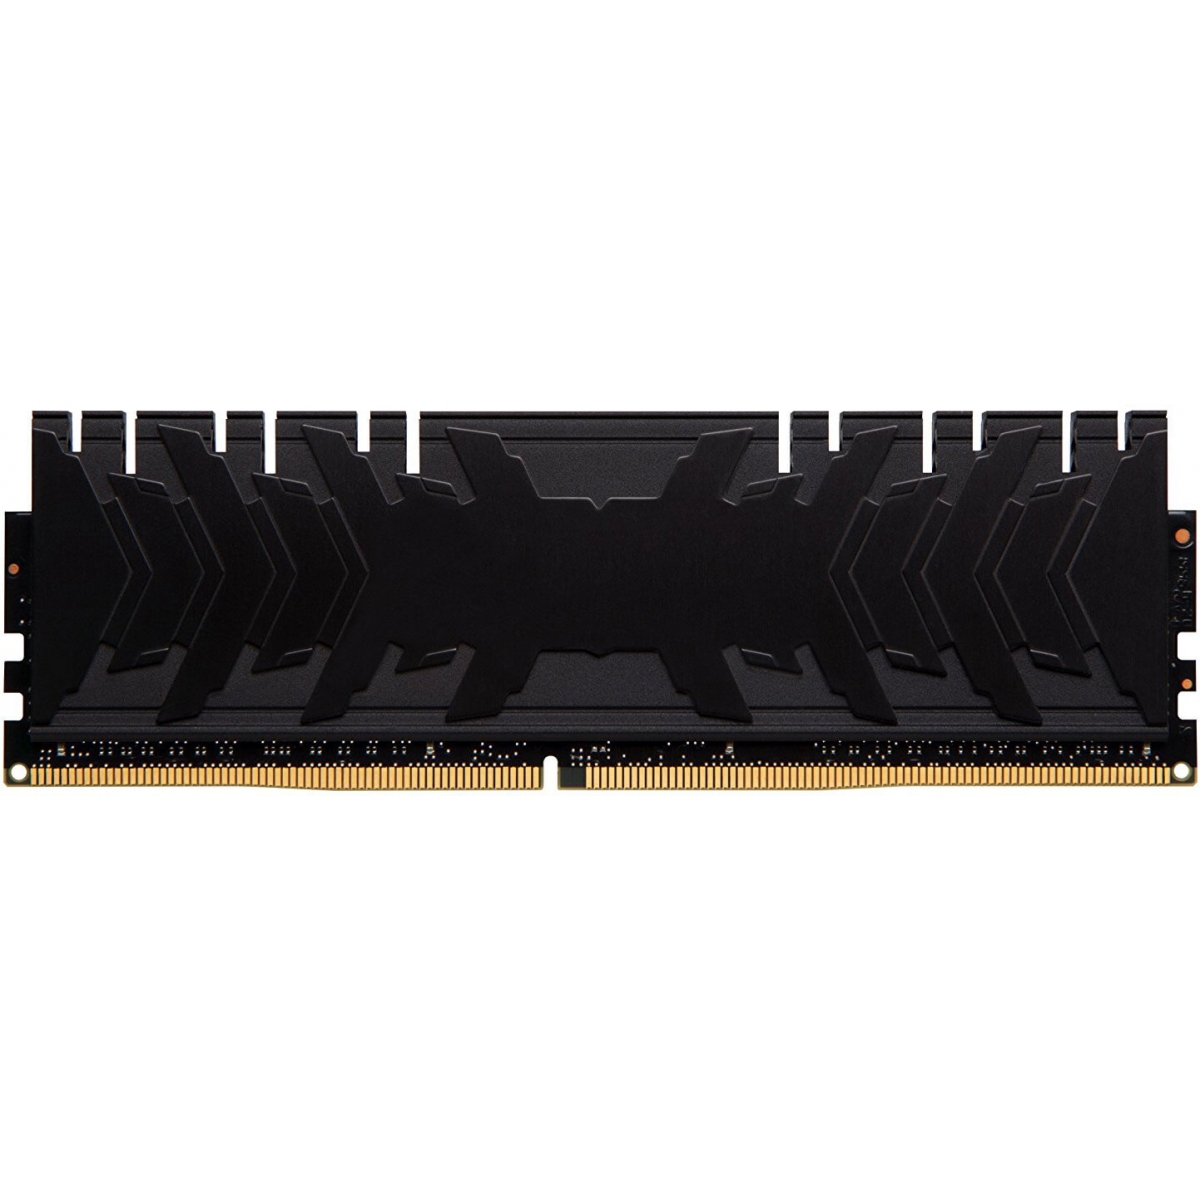 Memória DDR4 Kingston HyperX Predator, 8GB 2666MHZ,  HX426C13PB3/8